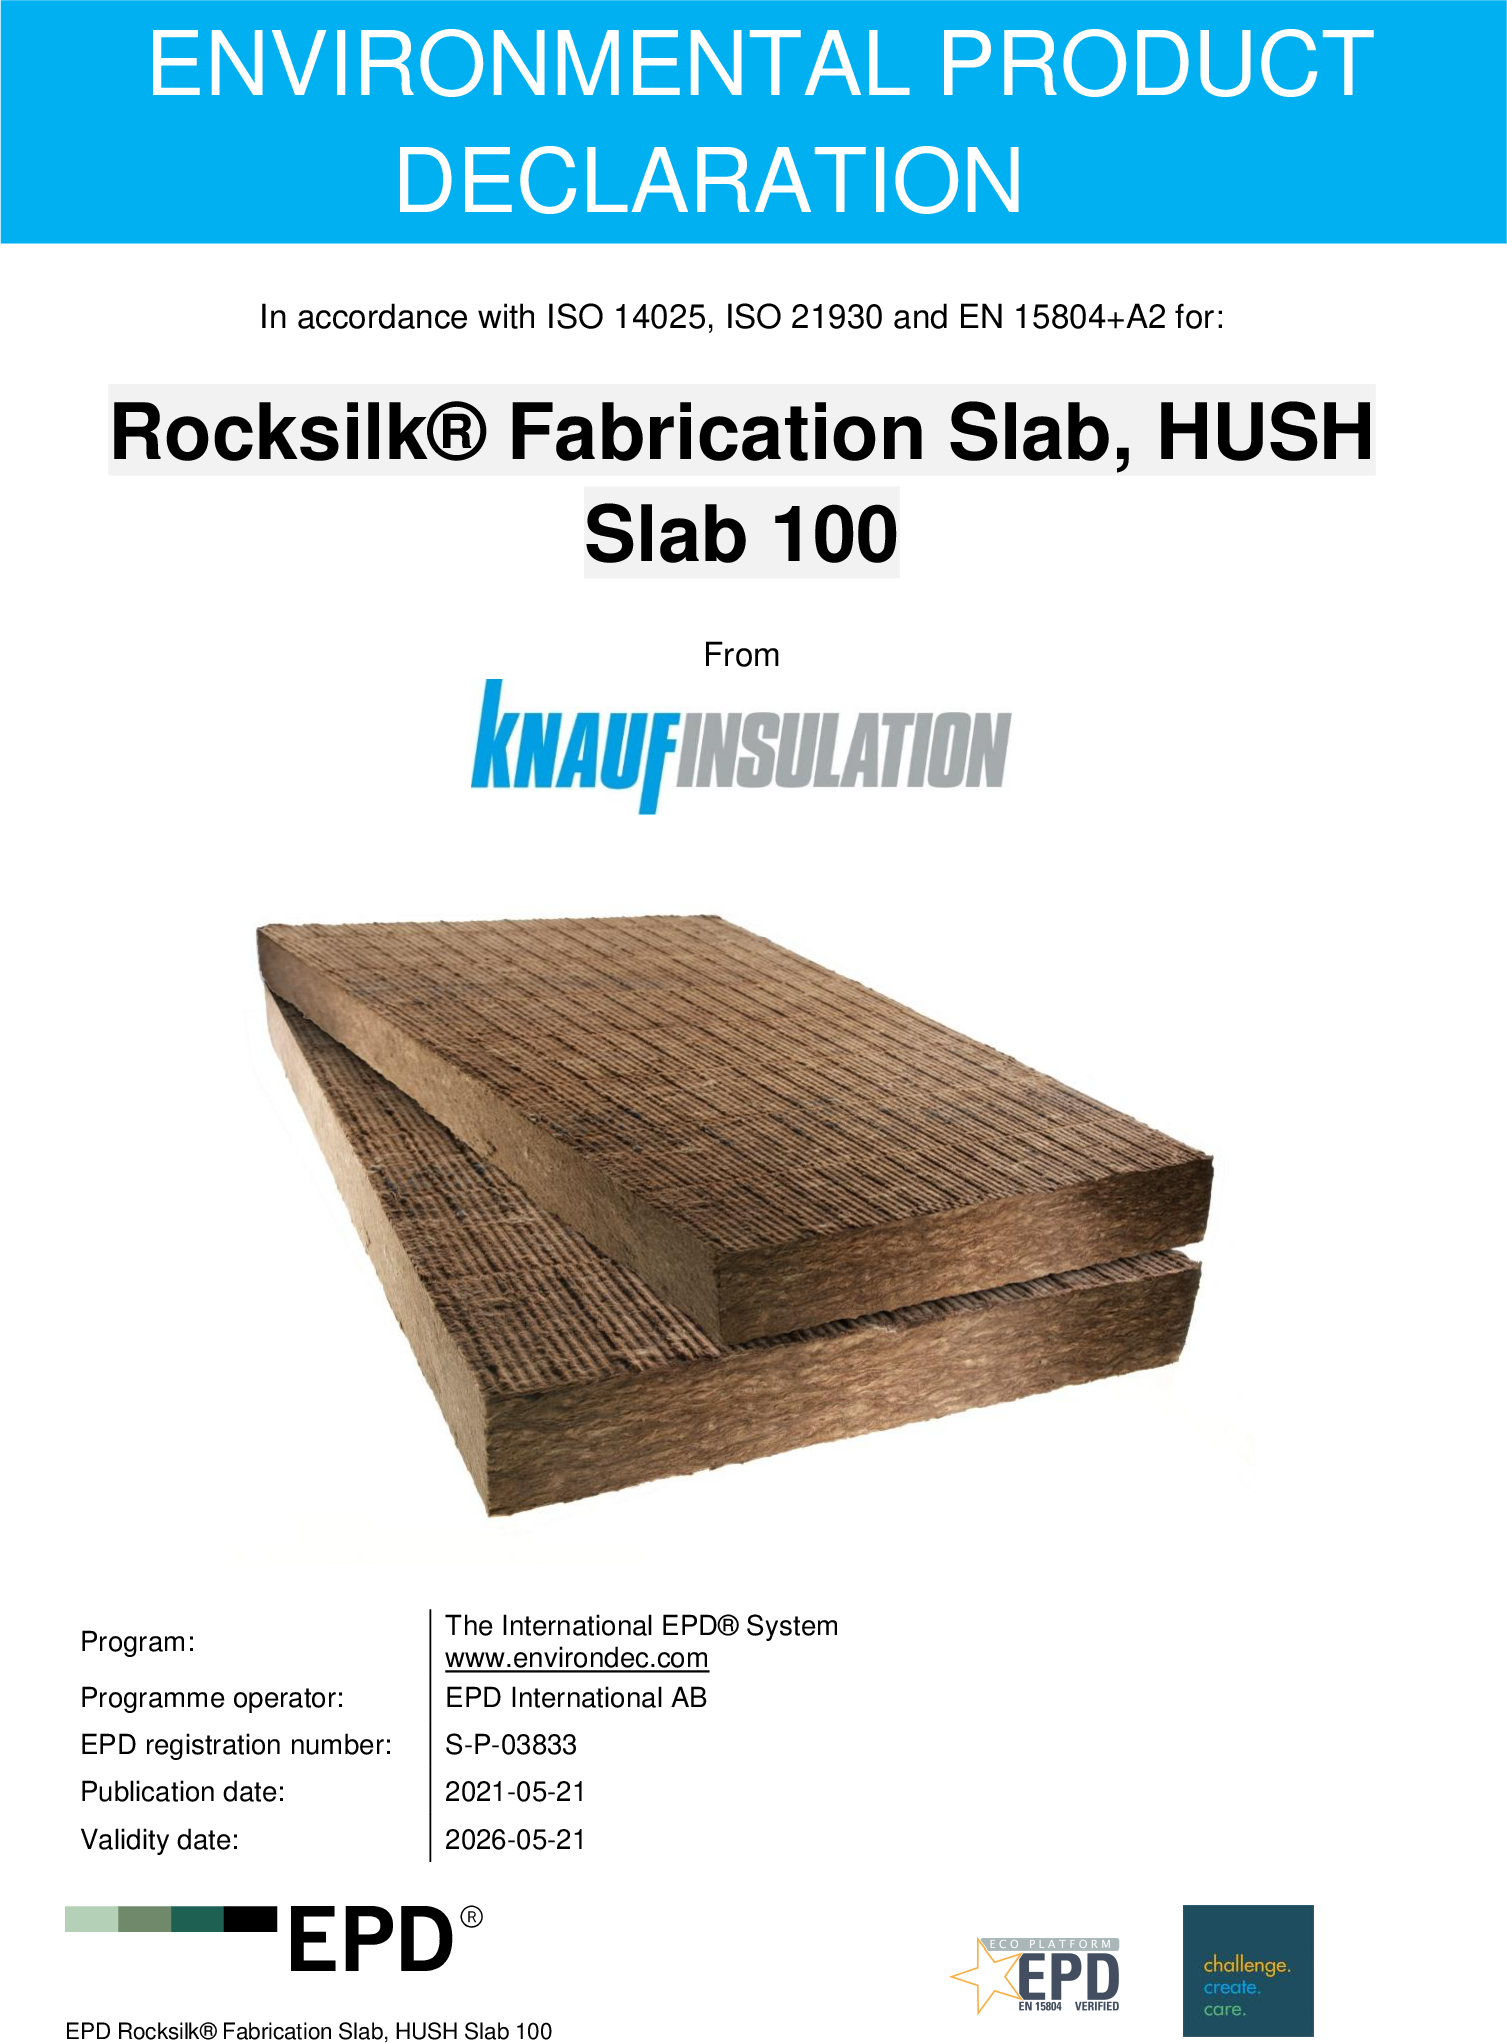 Rocksilk® Fabrication Slab, HUSH Slab 100